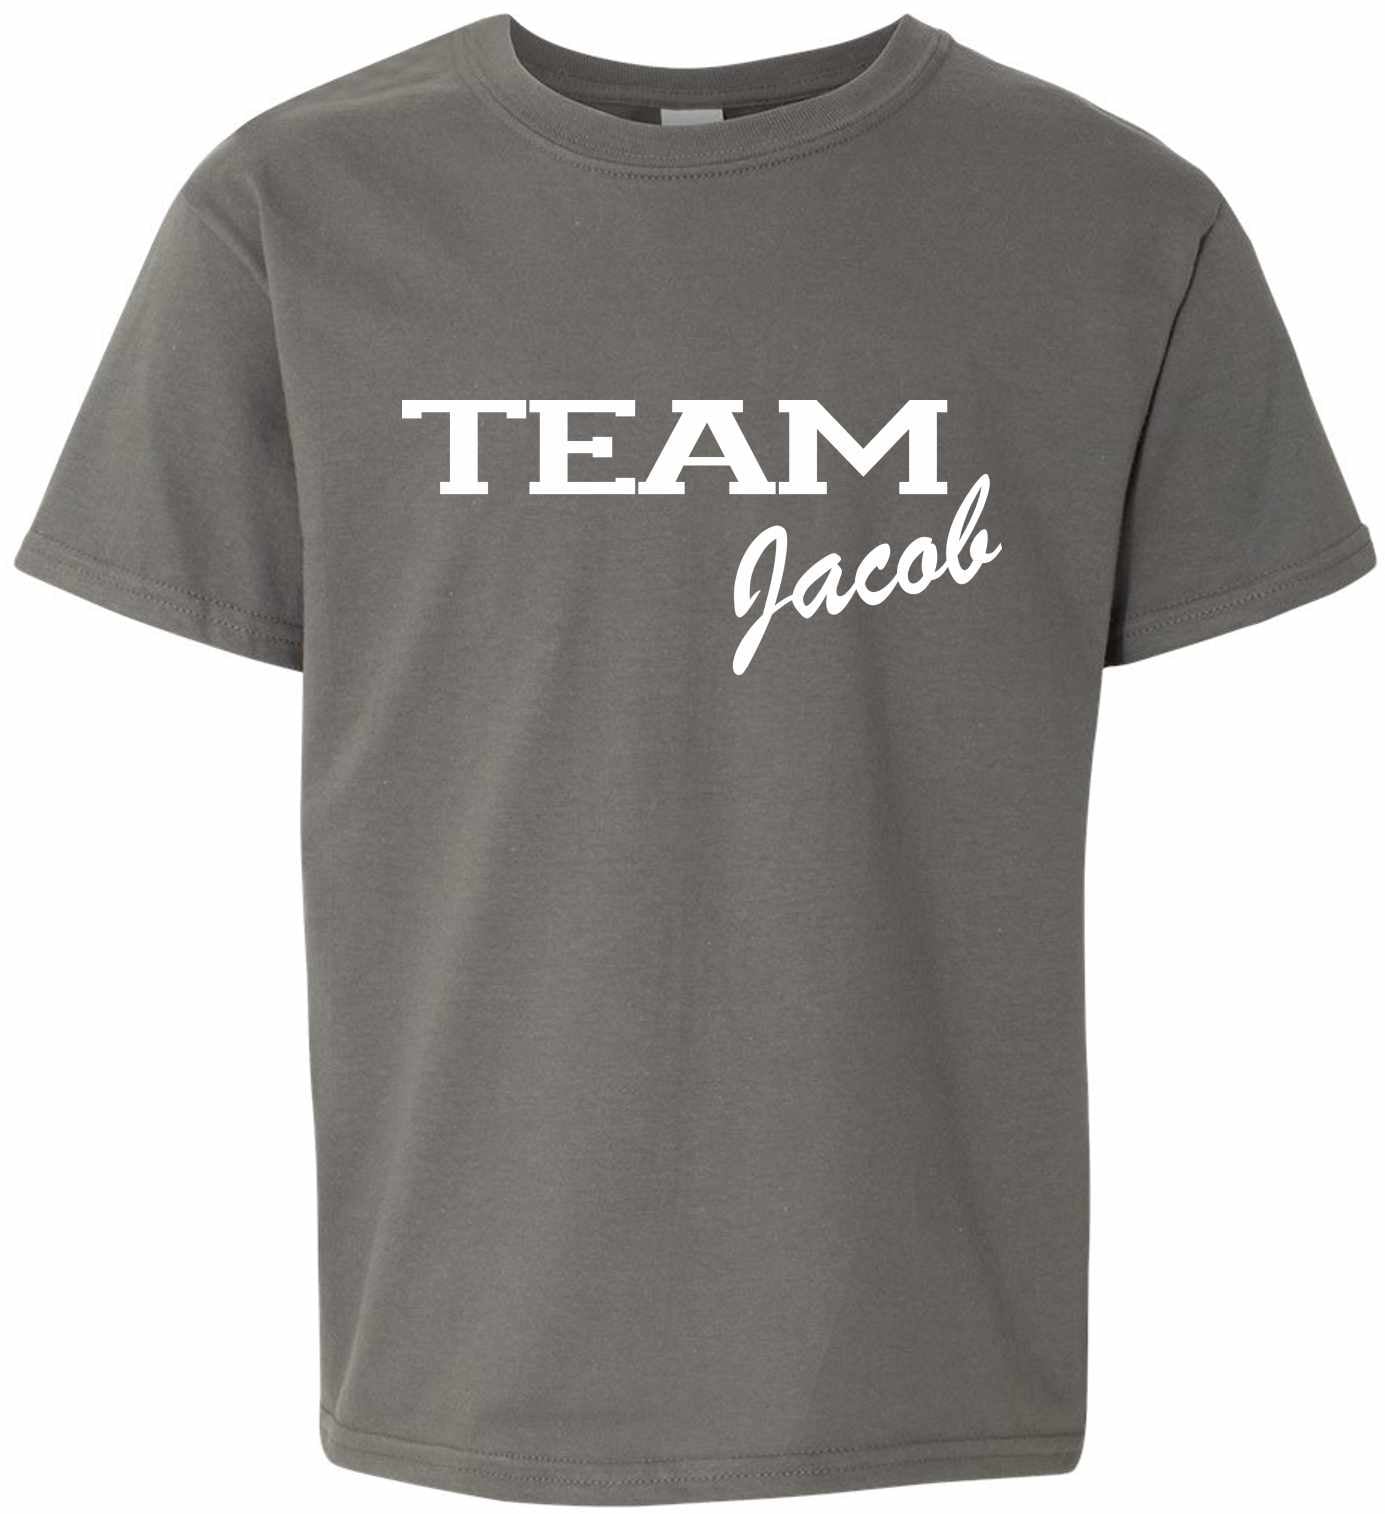 TEAM JACOB on Kids T-Shirt